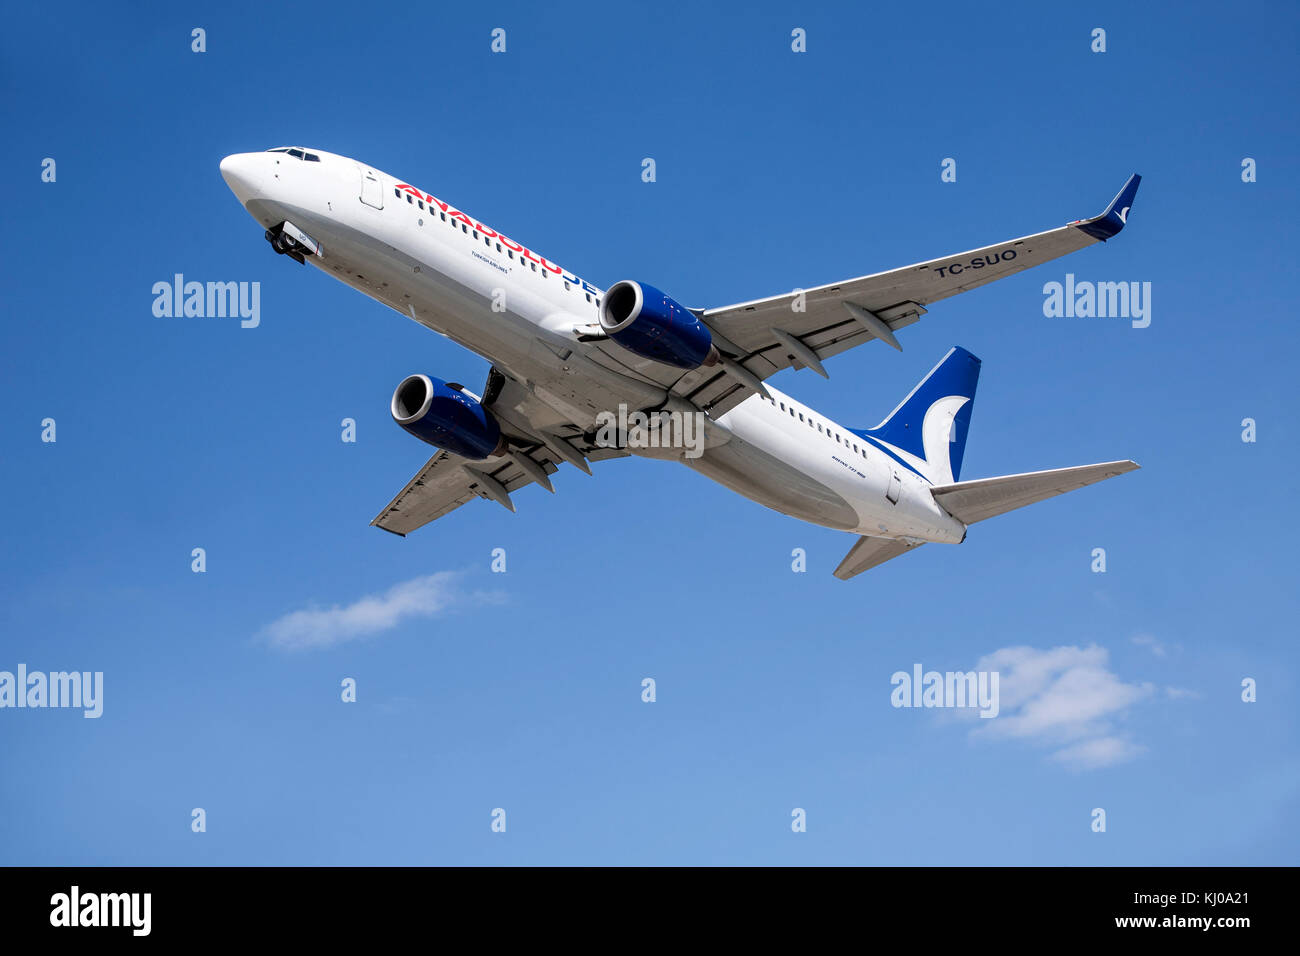 CHISINAU, MOLDOVA, 19.08.2014: Image of AnadoluJet, Turkish Airlaines  passenger airliner landing at Chisinau Airport on 19.08.2014 Stock Photo